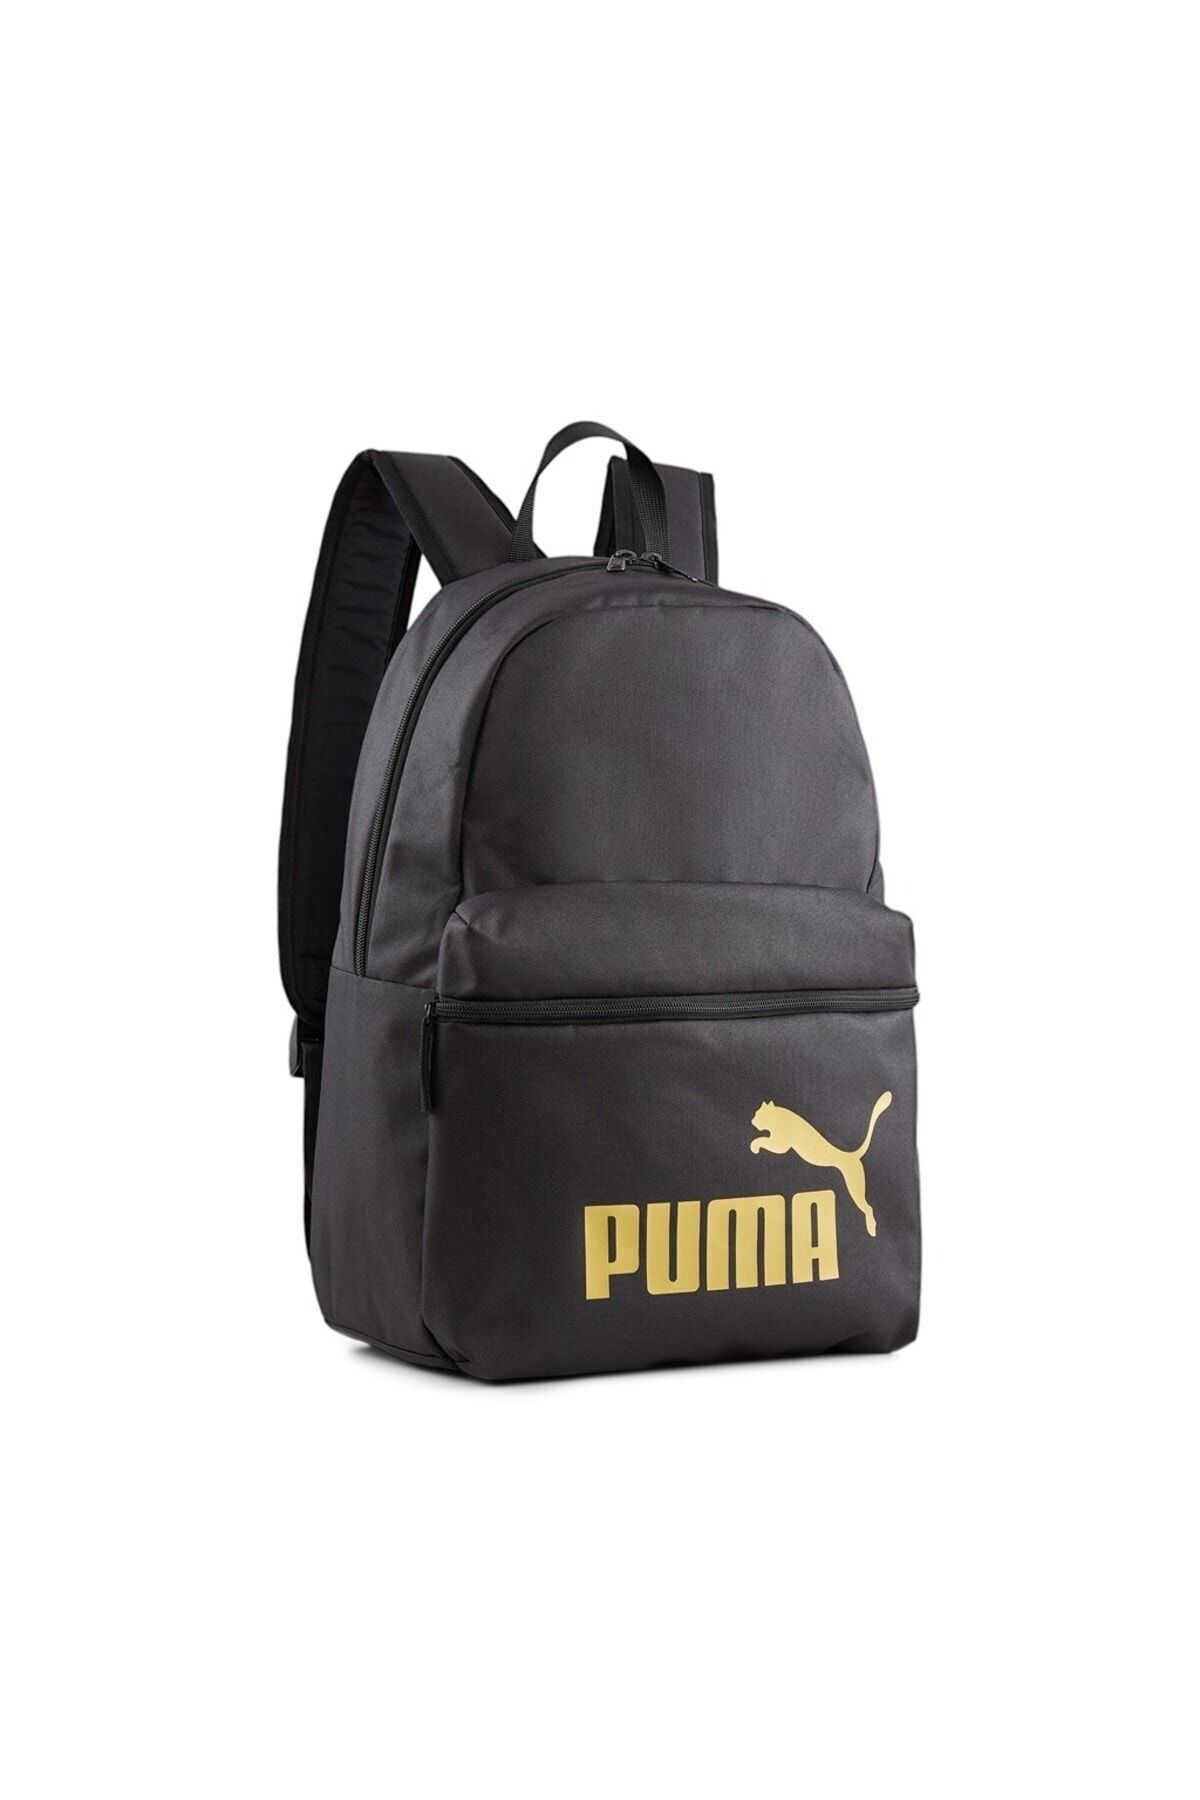 Puma Sırt Çantası PUMA Phase Backpack PUMA Black-Golden Lo 07994303